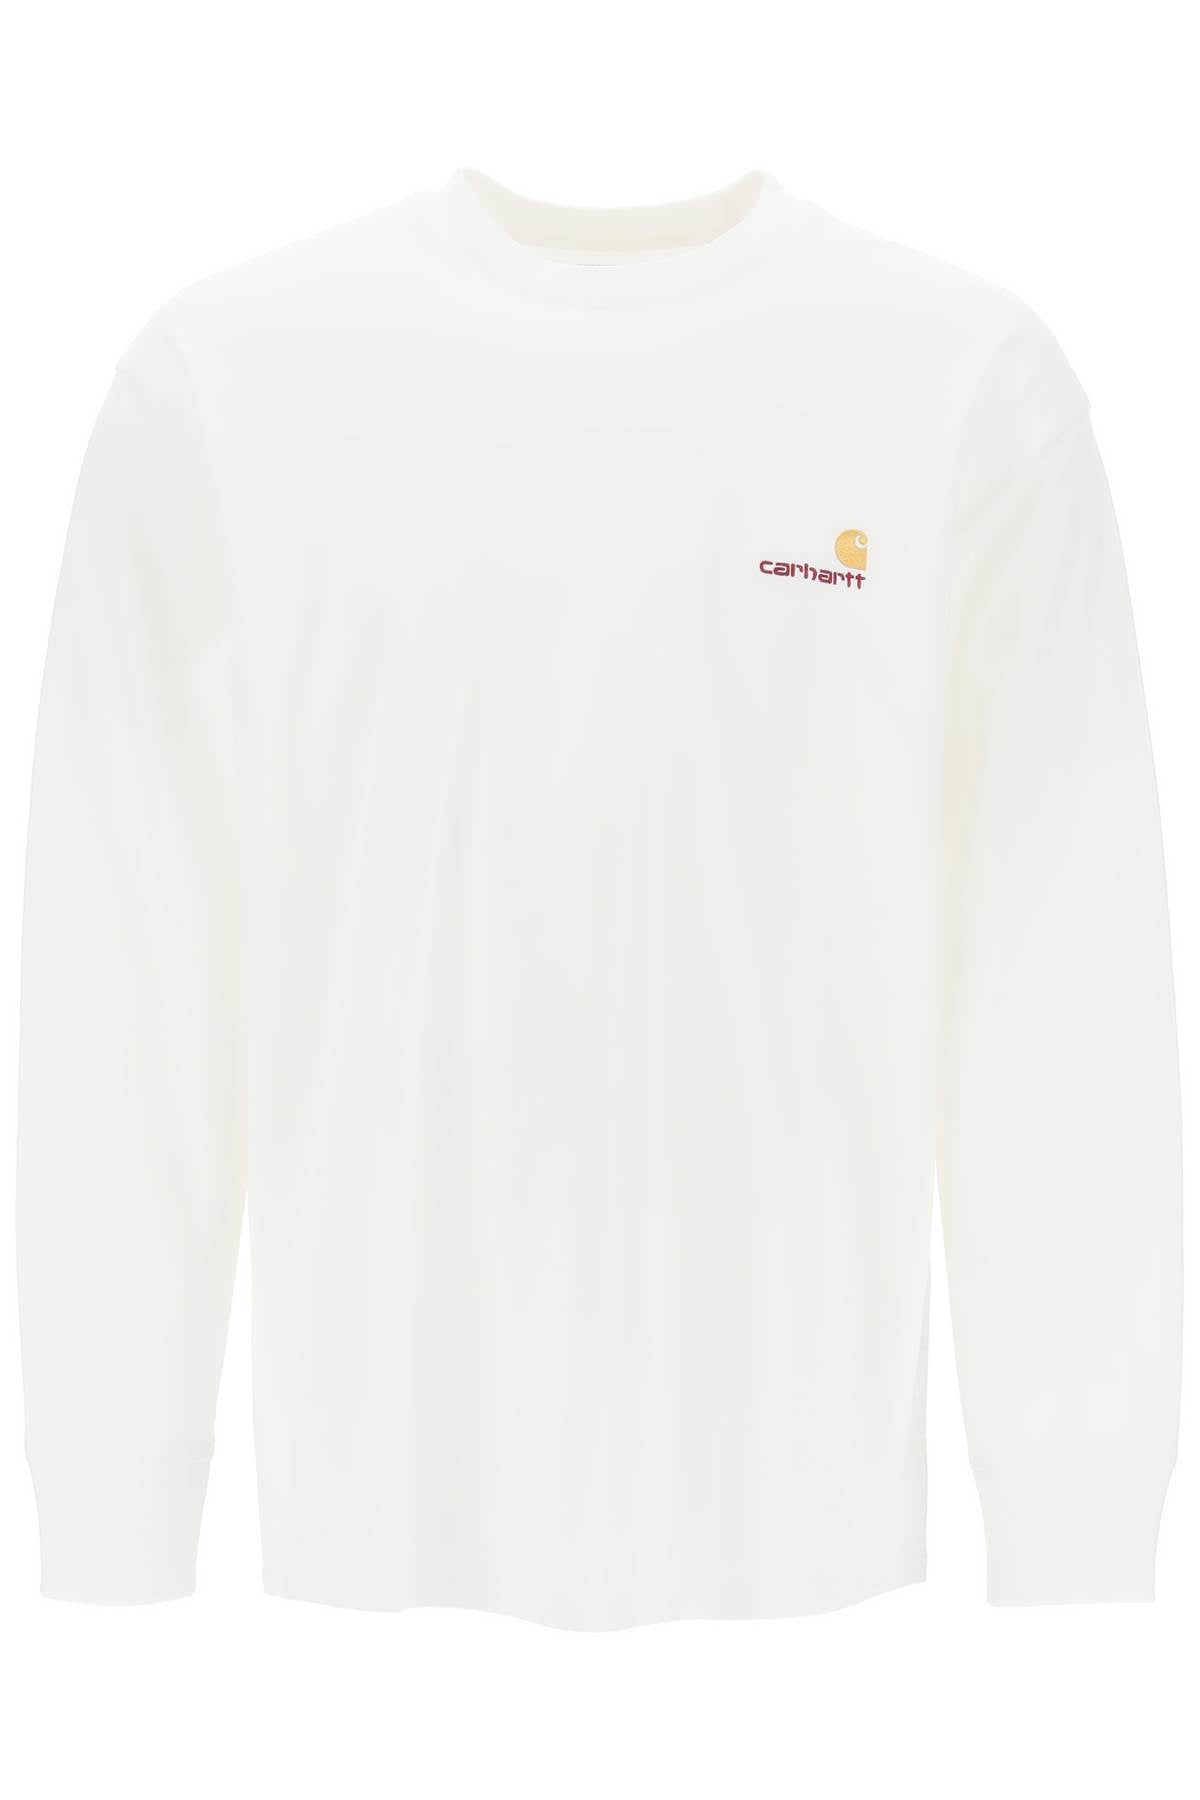 Carhartt Wip "Long-Sleeved T-Shirt With-Carhartt Wip-Urbanheer